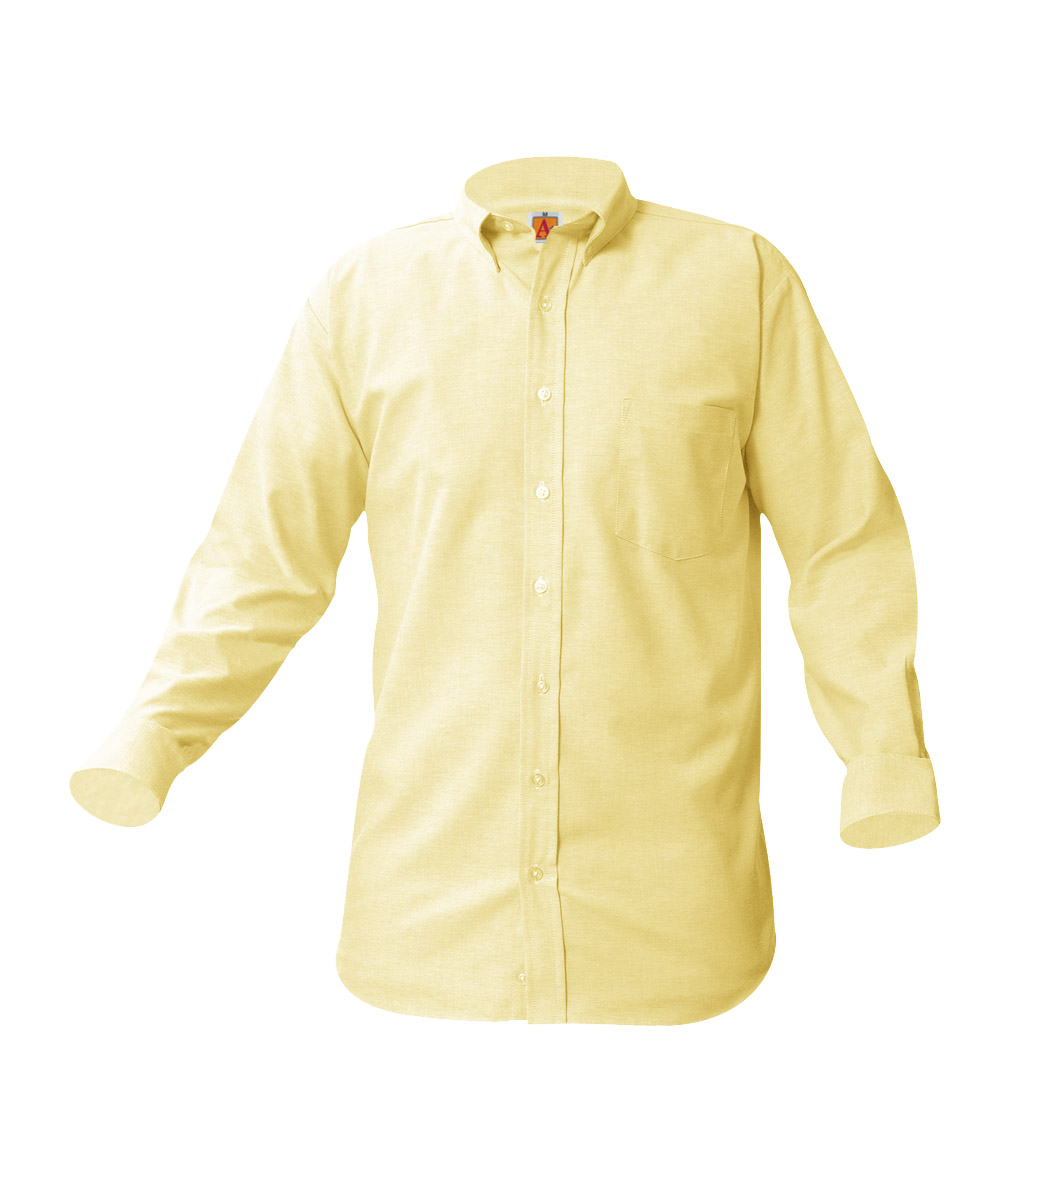 yellow long shirt dress